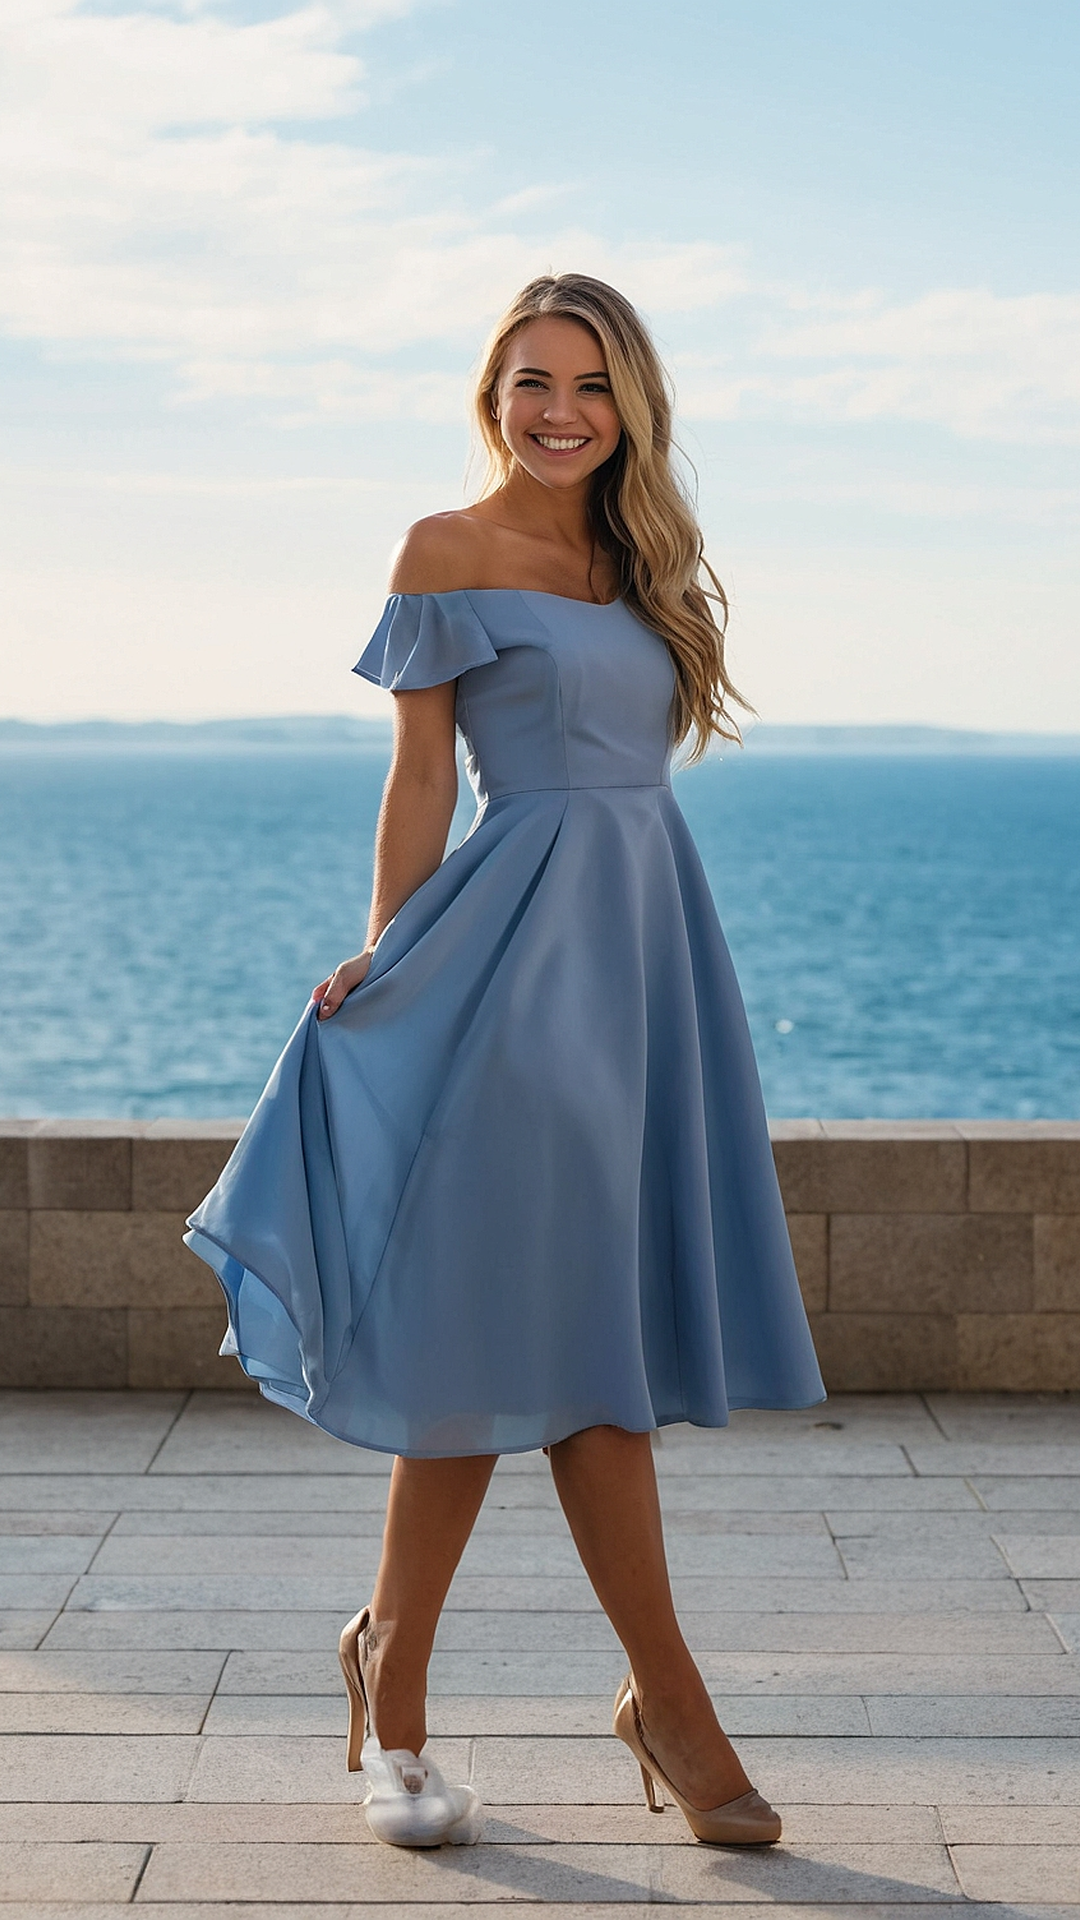 Classic Elegance: Stunning Graduation Dress Ideas